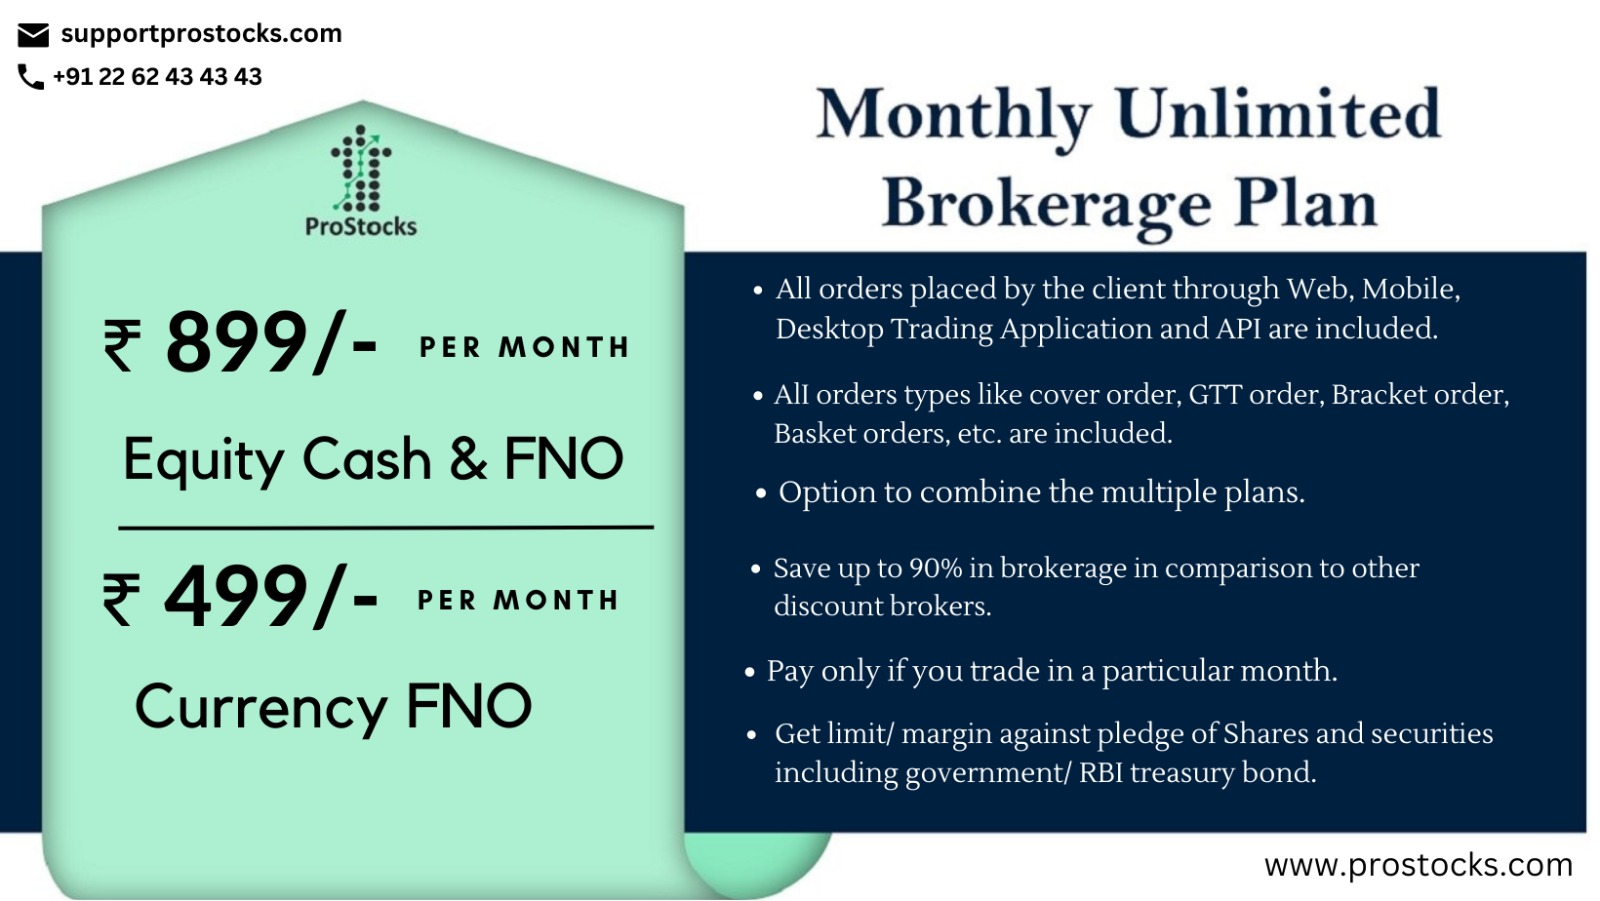 Monthly Unlimited Brokerage Plan